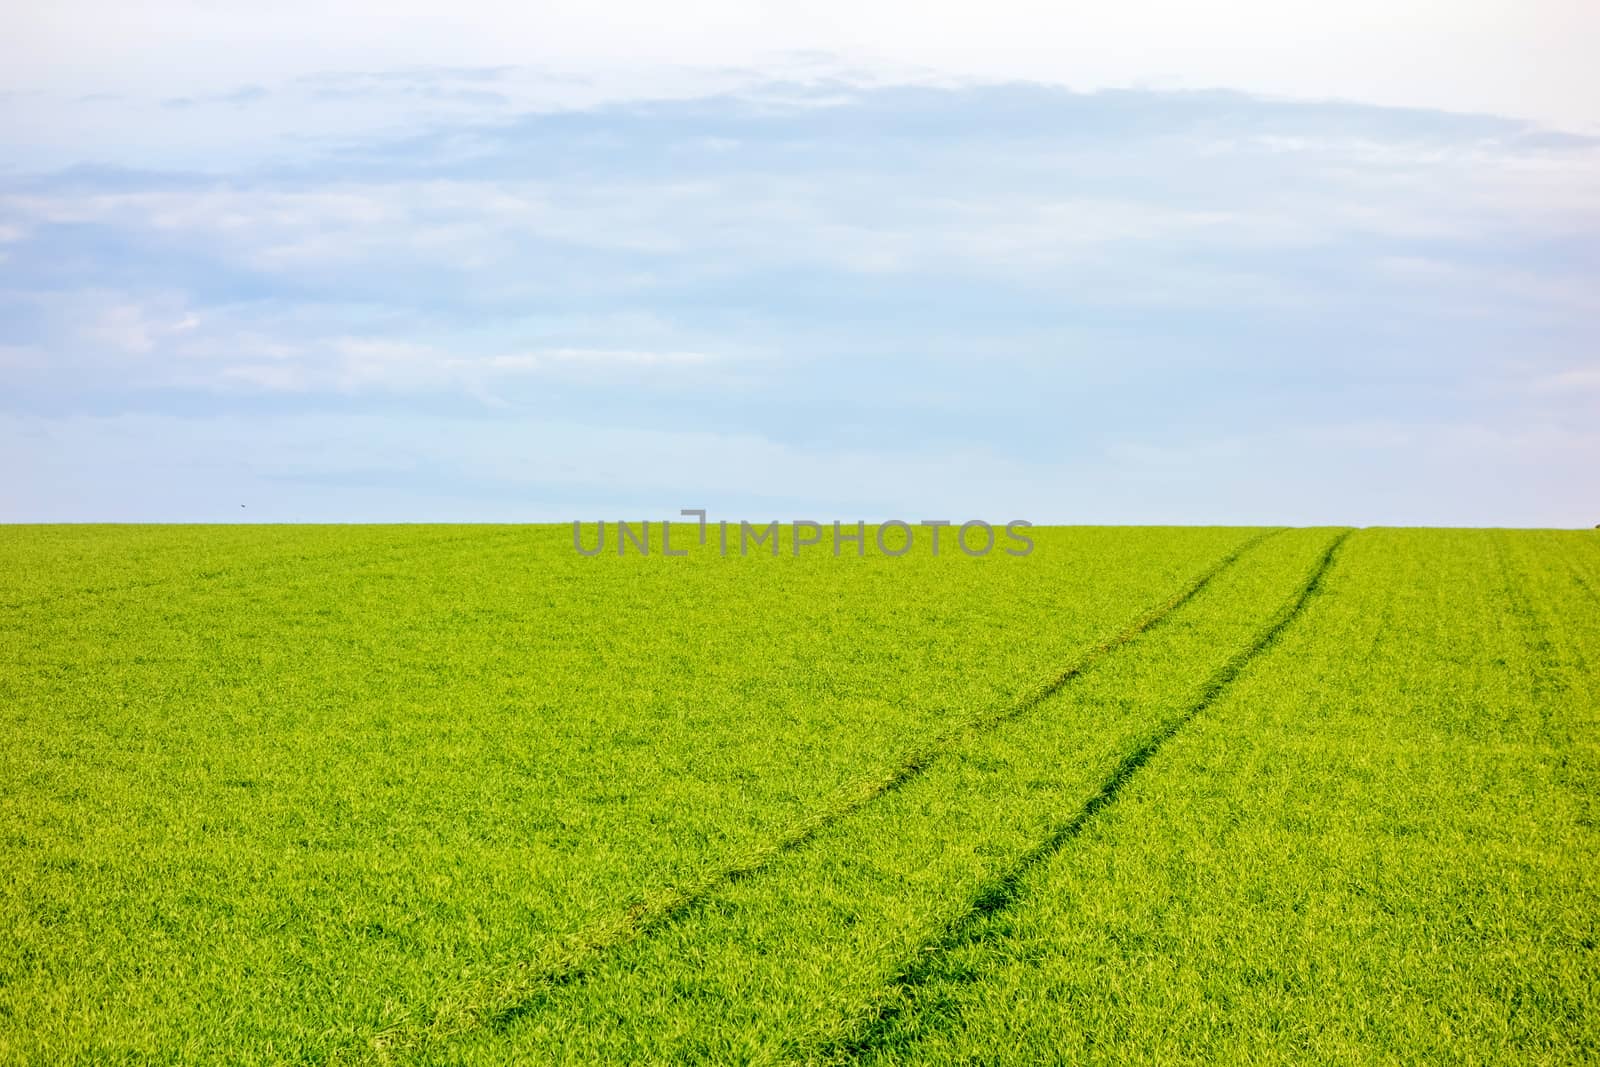 Farmland - green meadow, blue sky - rural landscape